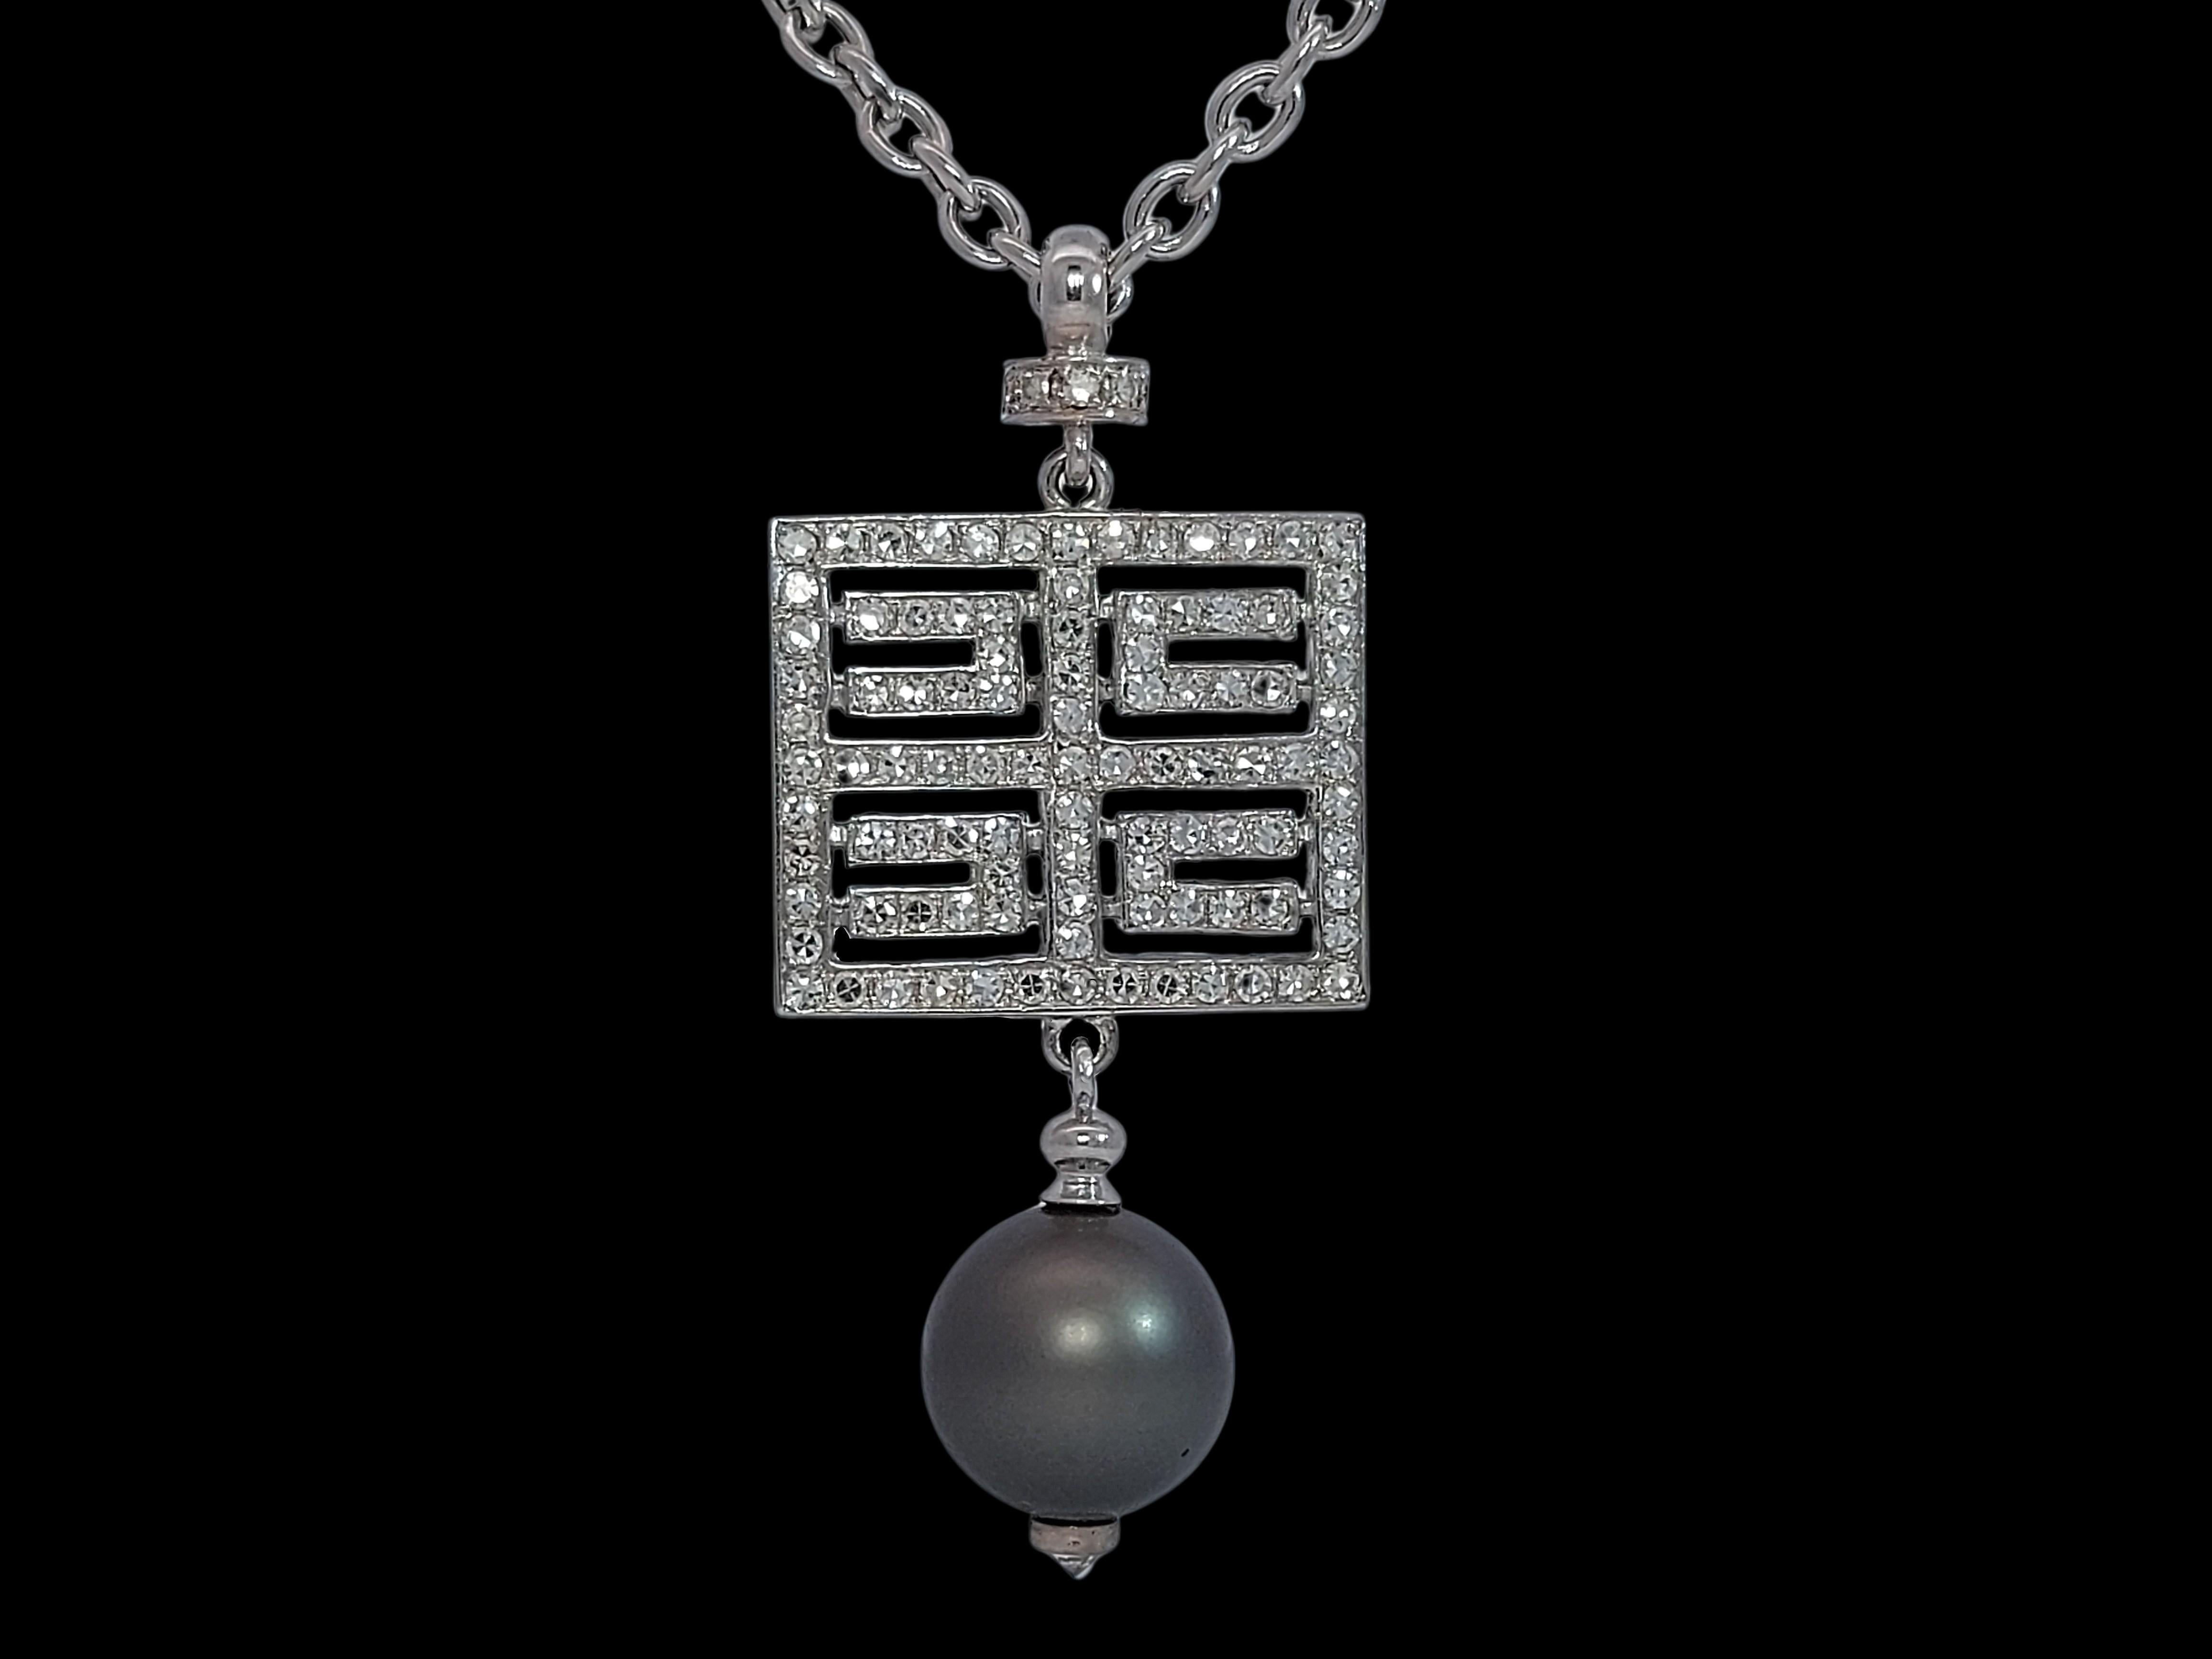 18kt White Gold Pendant / Necklace With 1.08ct Diamonds & Black Tahiti Pearl 

Diamonds: brilliant cut diamonds, together approx. 1.08ct

Pearl: Tahiti Pearl with a diameter of 11.2mm

Material: 18kt white gold

Measurements: 47.9 mm x 21.4 x 2.3